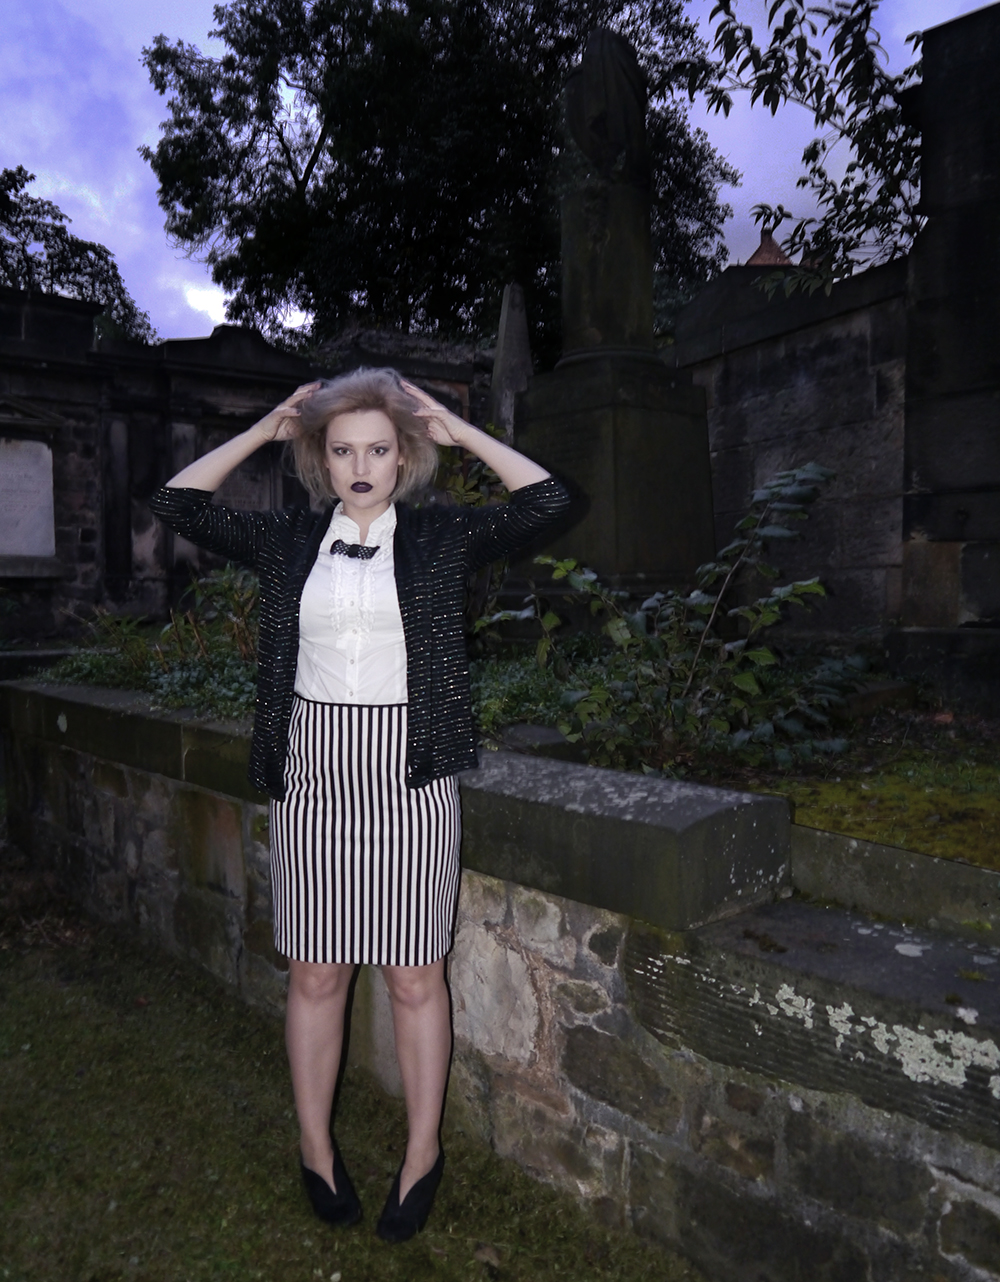 wearable halloween outfit, Beetlejuice girl costume, monochrome ghost costume, easy halloween costume, unlikely horror style icon, blogger halloween, St John's cemetery Edinburgh, creepy Edinburgh ghost